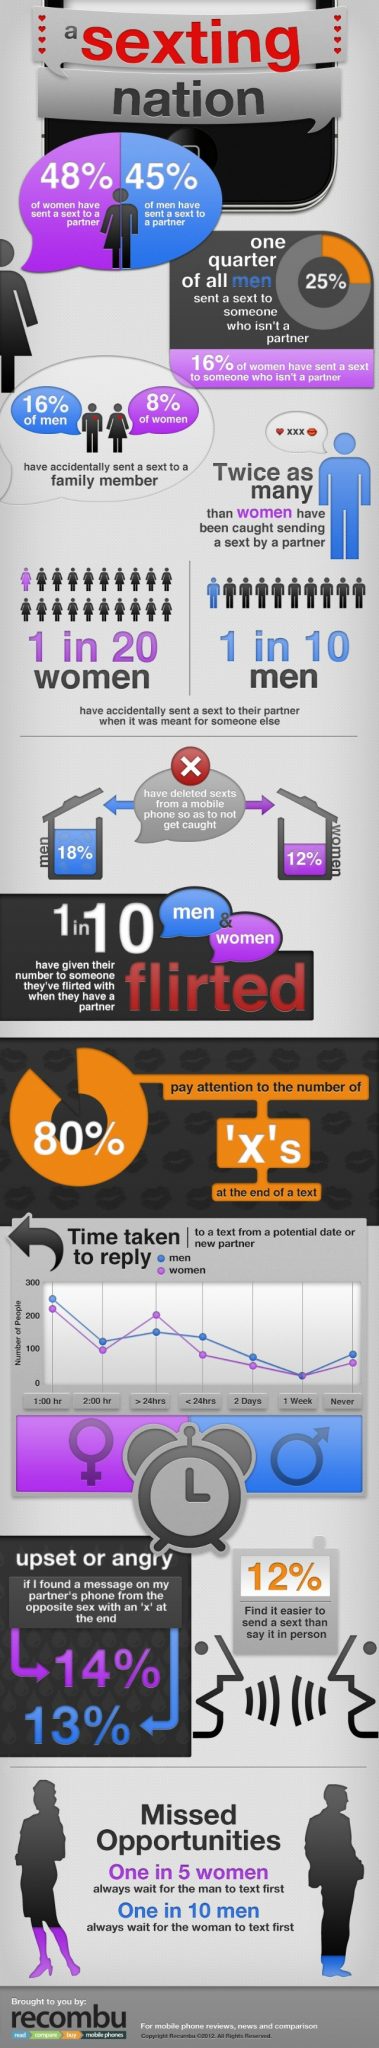 sexting infographic